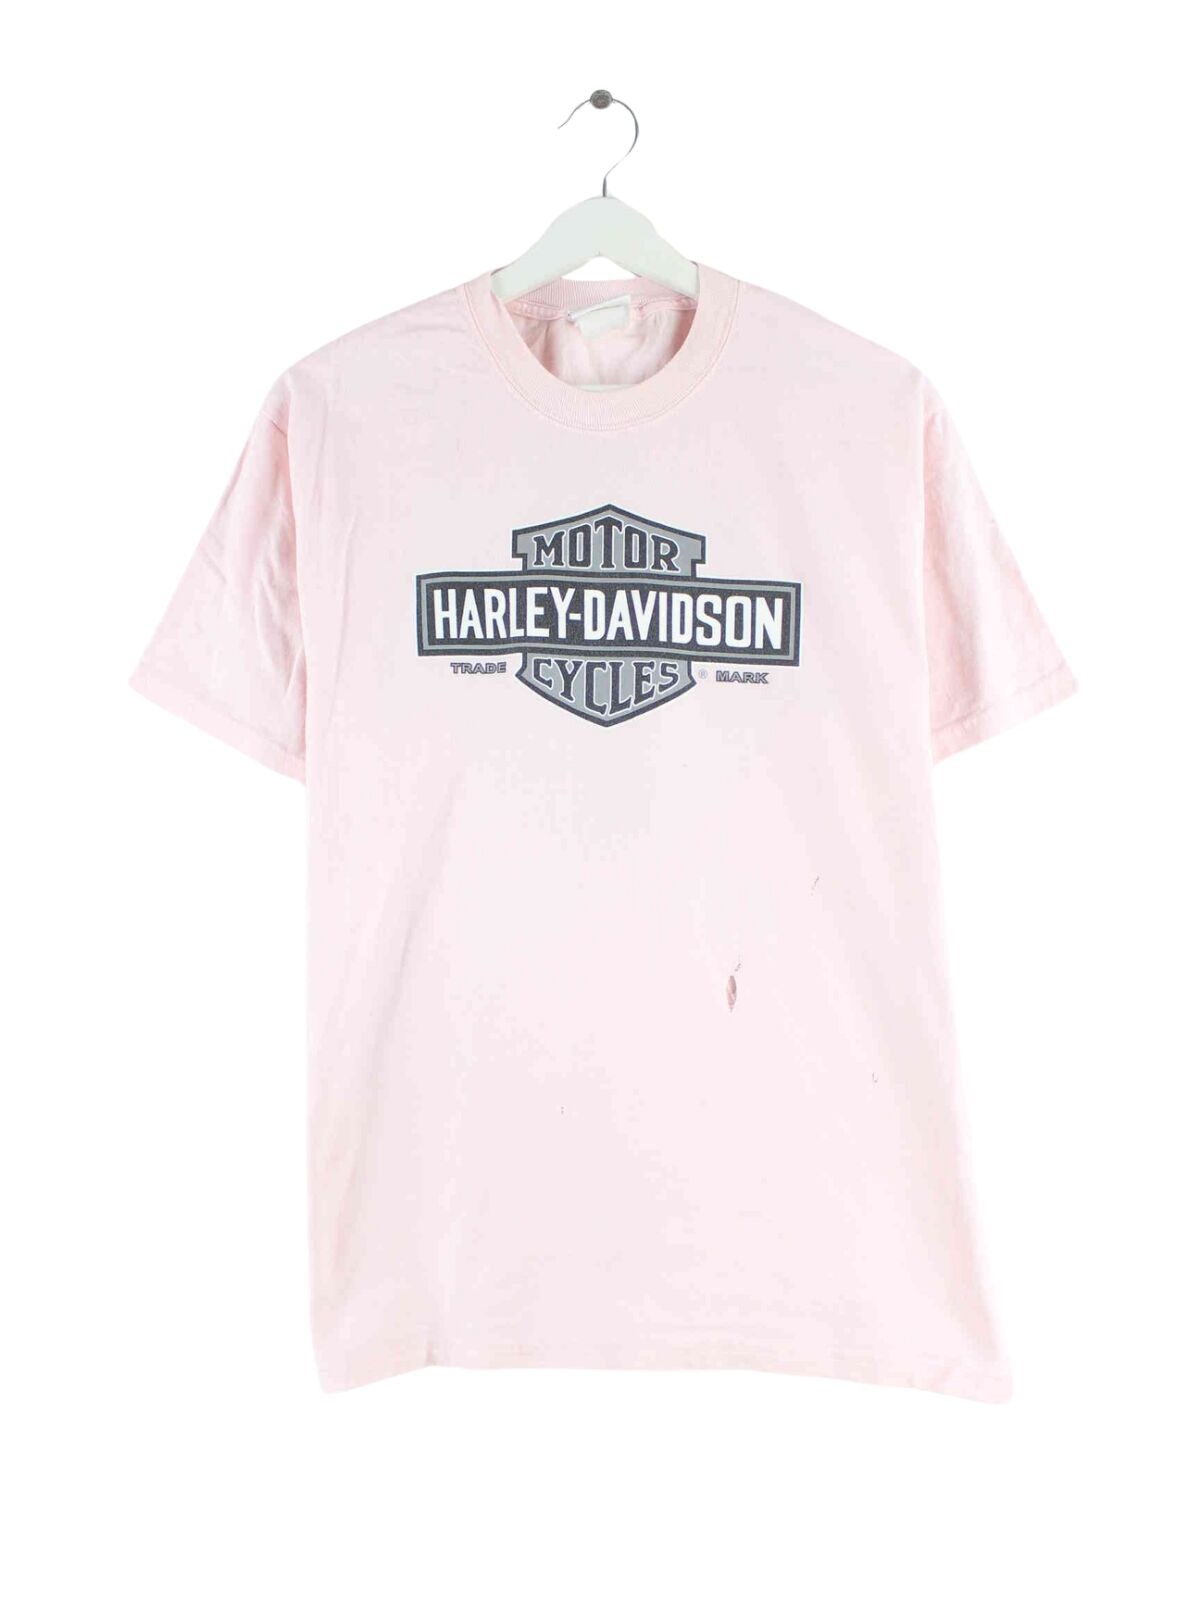 Harley Davidson 2004 Minnesota Elk River Print T-Shirt Rosa M (front image)